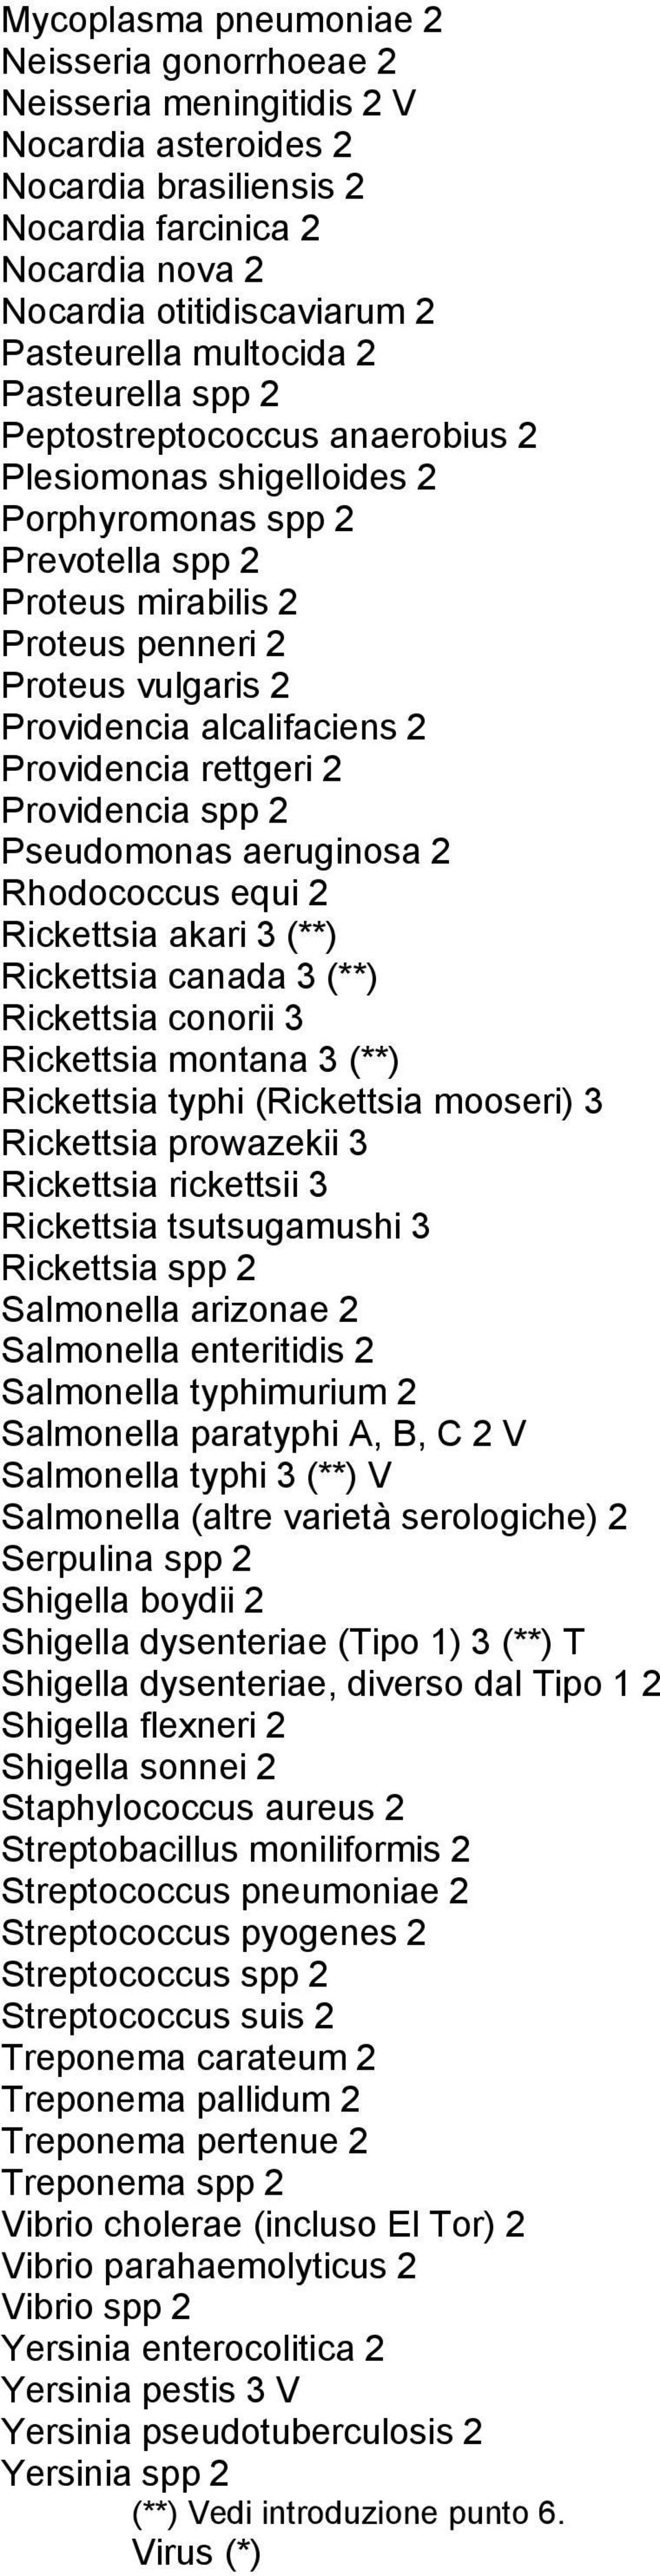 alcalifaciens 2 Providencia rettgeri 2 Providencia spp 2 Pseudomonas aeruginosa 2 Rhodococcus equi 2 Rickettsia akari 3 (**) Rickettsia canada 3 (**) Rickettsia conorii 3 Rickettsia montana 3 (**)